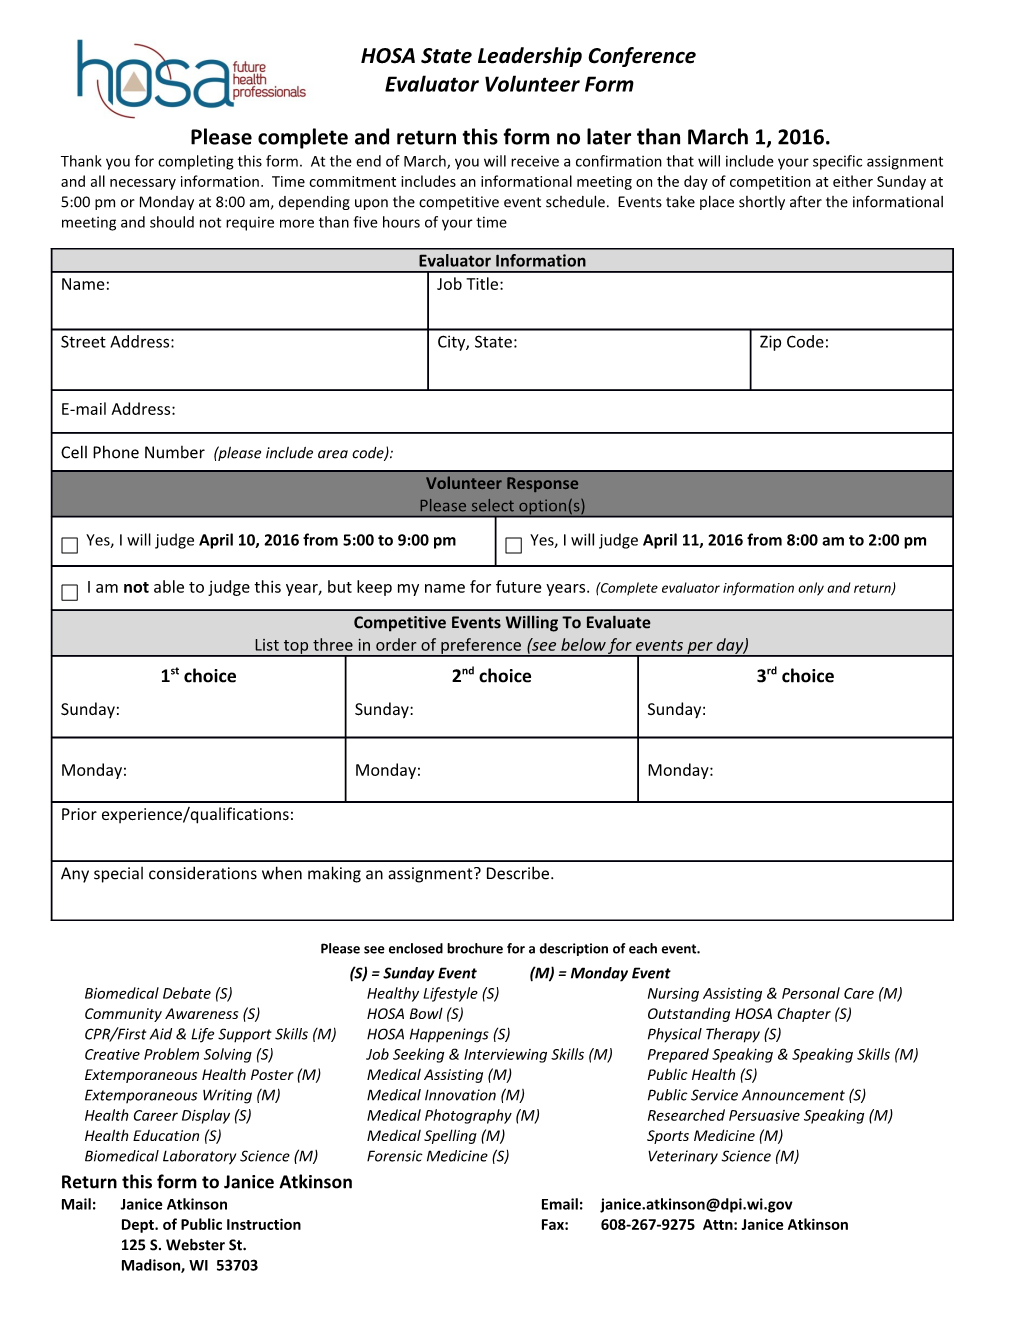 Wisconsin HOSA State Leadership Conference Evaluator Volunteer Form